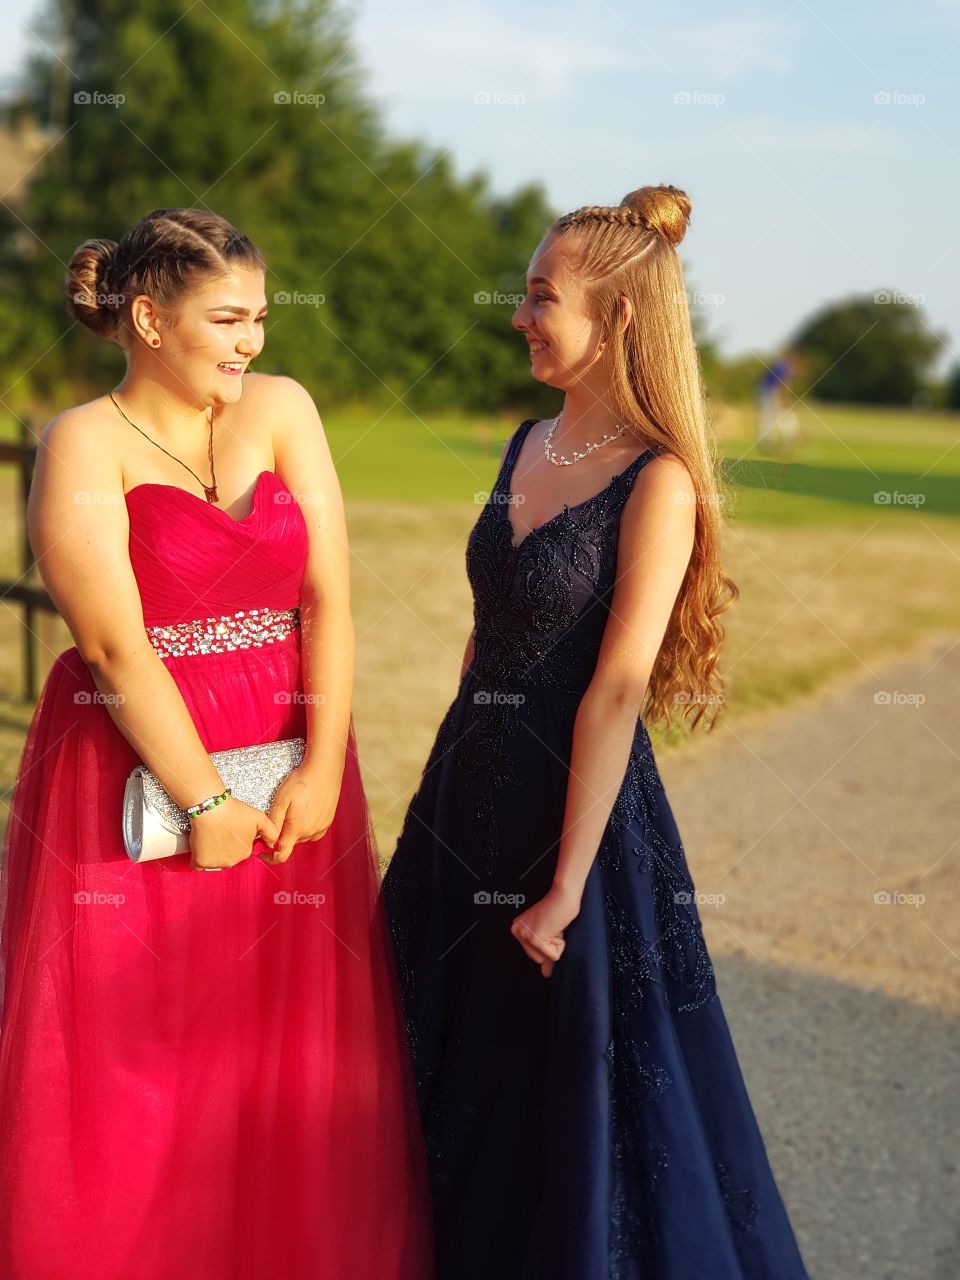 2 girls at their school prom